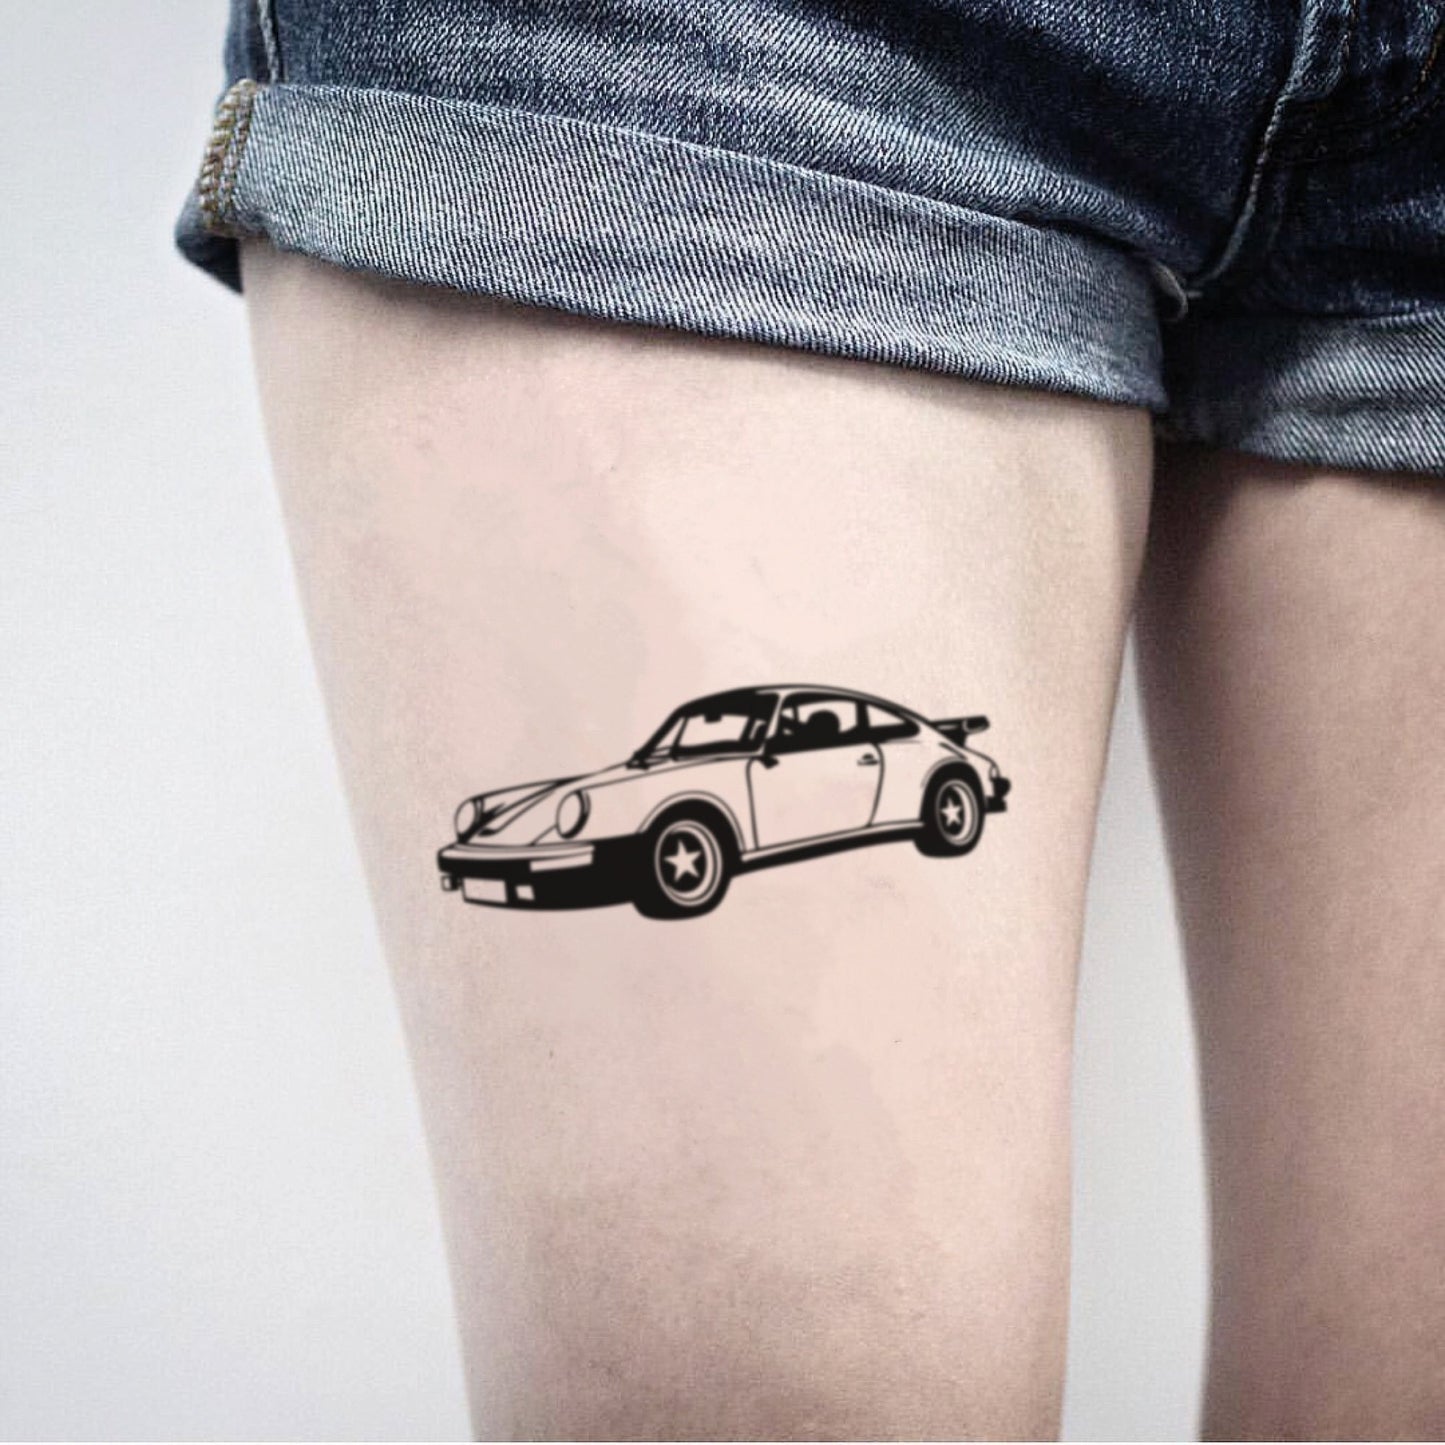 fake medium porsche rolls royce car quad illustrative temporary tattoo sticker design idea on thigh